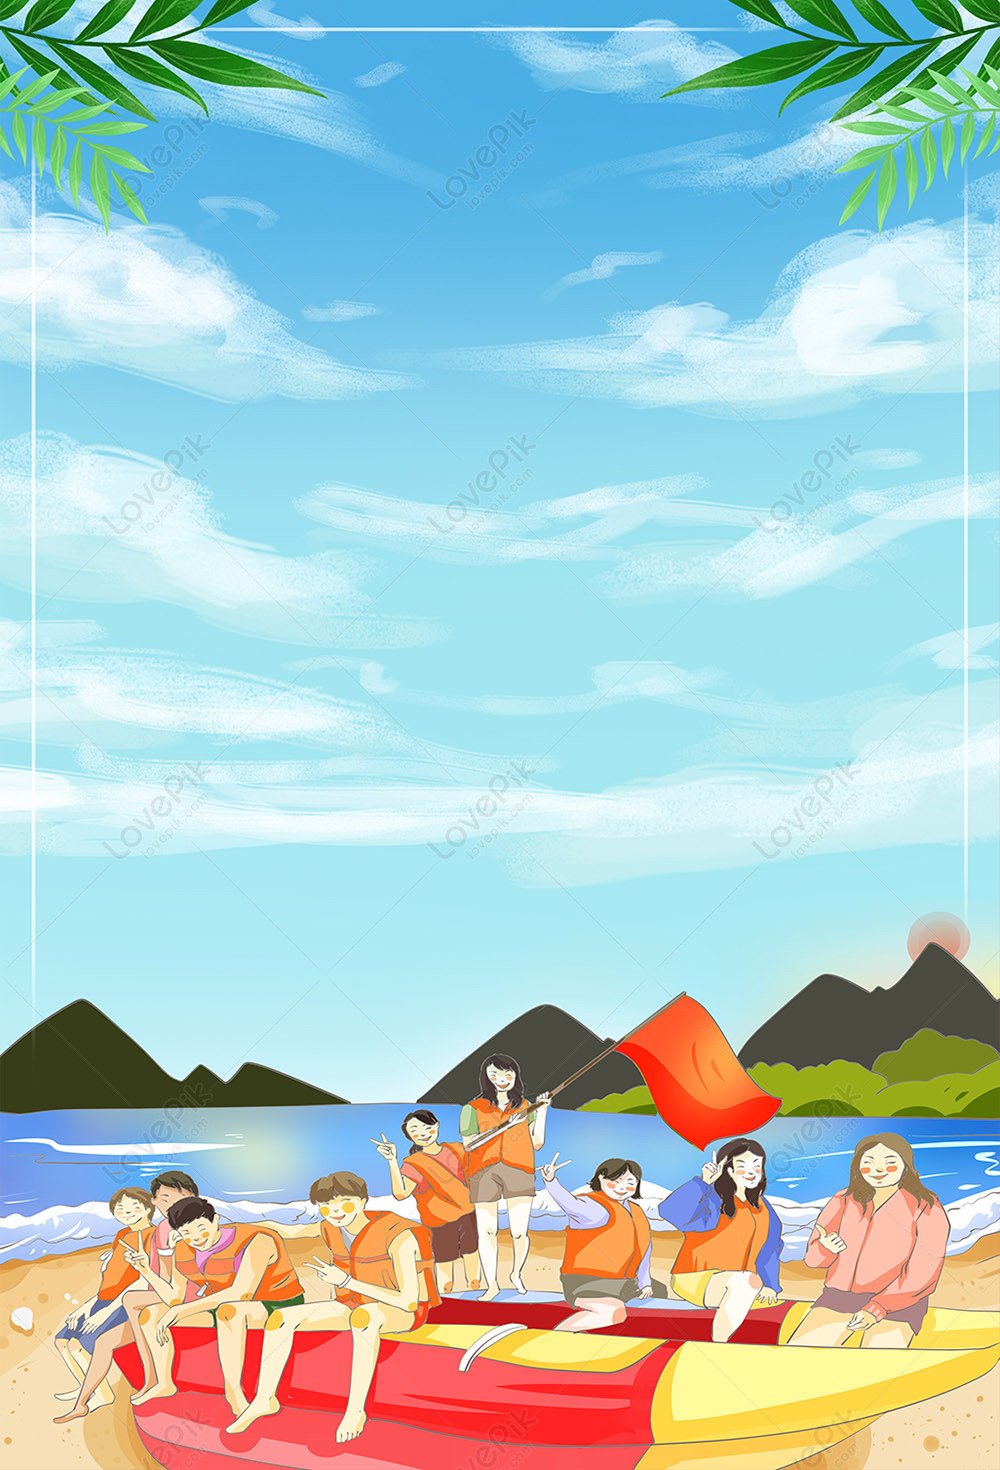 Summer Summer Camp Poster Background Download Free | Poster Background  Image on Lovepik | 401590970